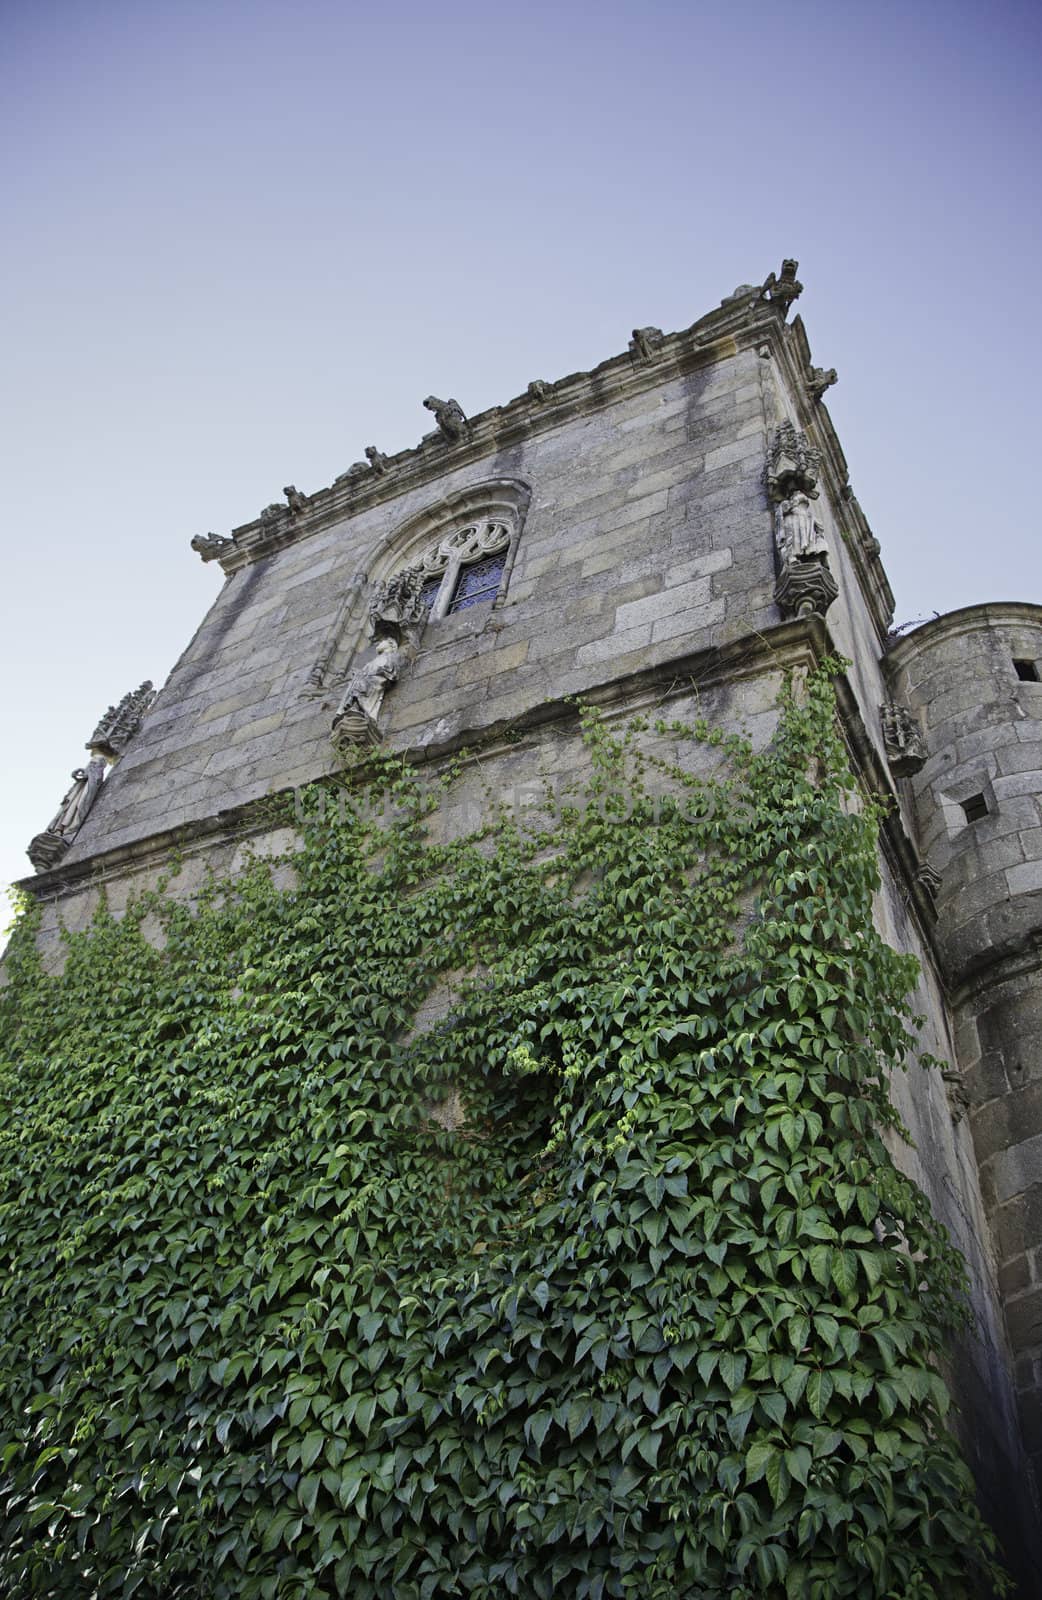 Old castle in Portugal by esebene